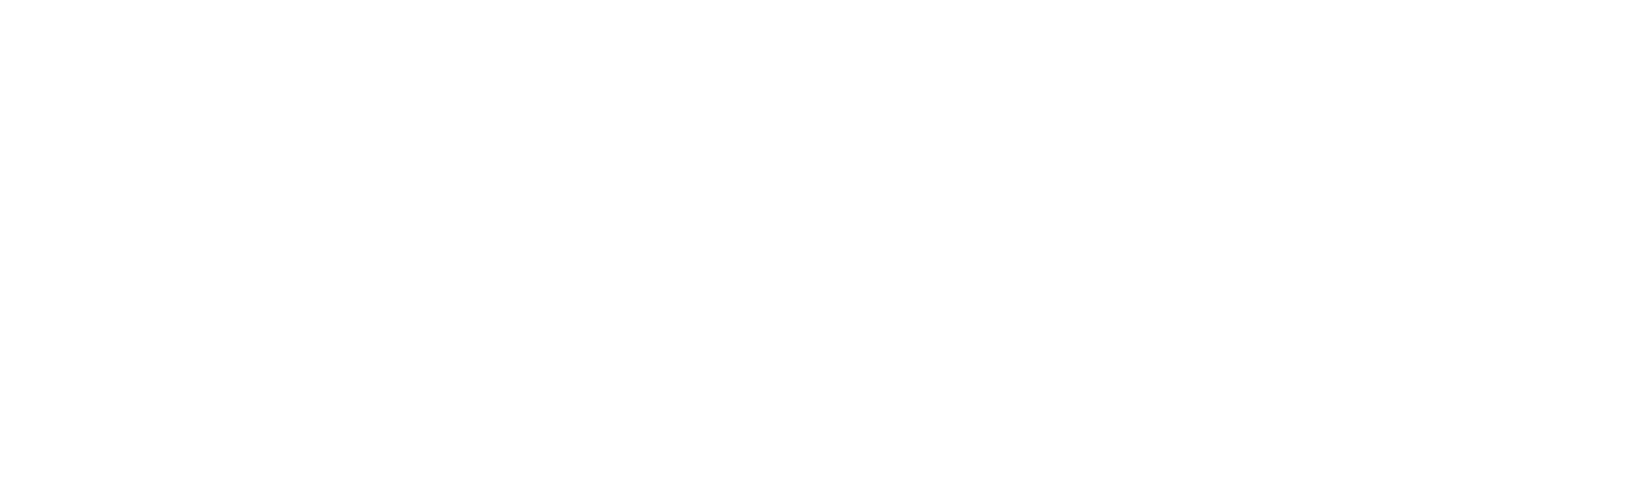 Varsinais-Suomen Nuoret Kotkat